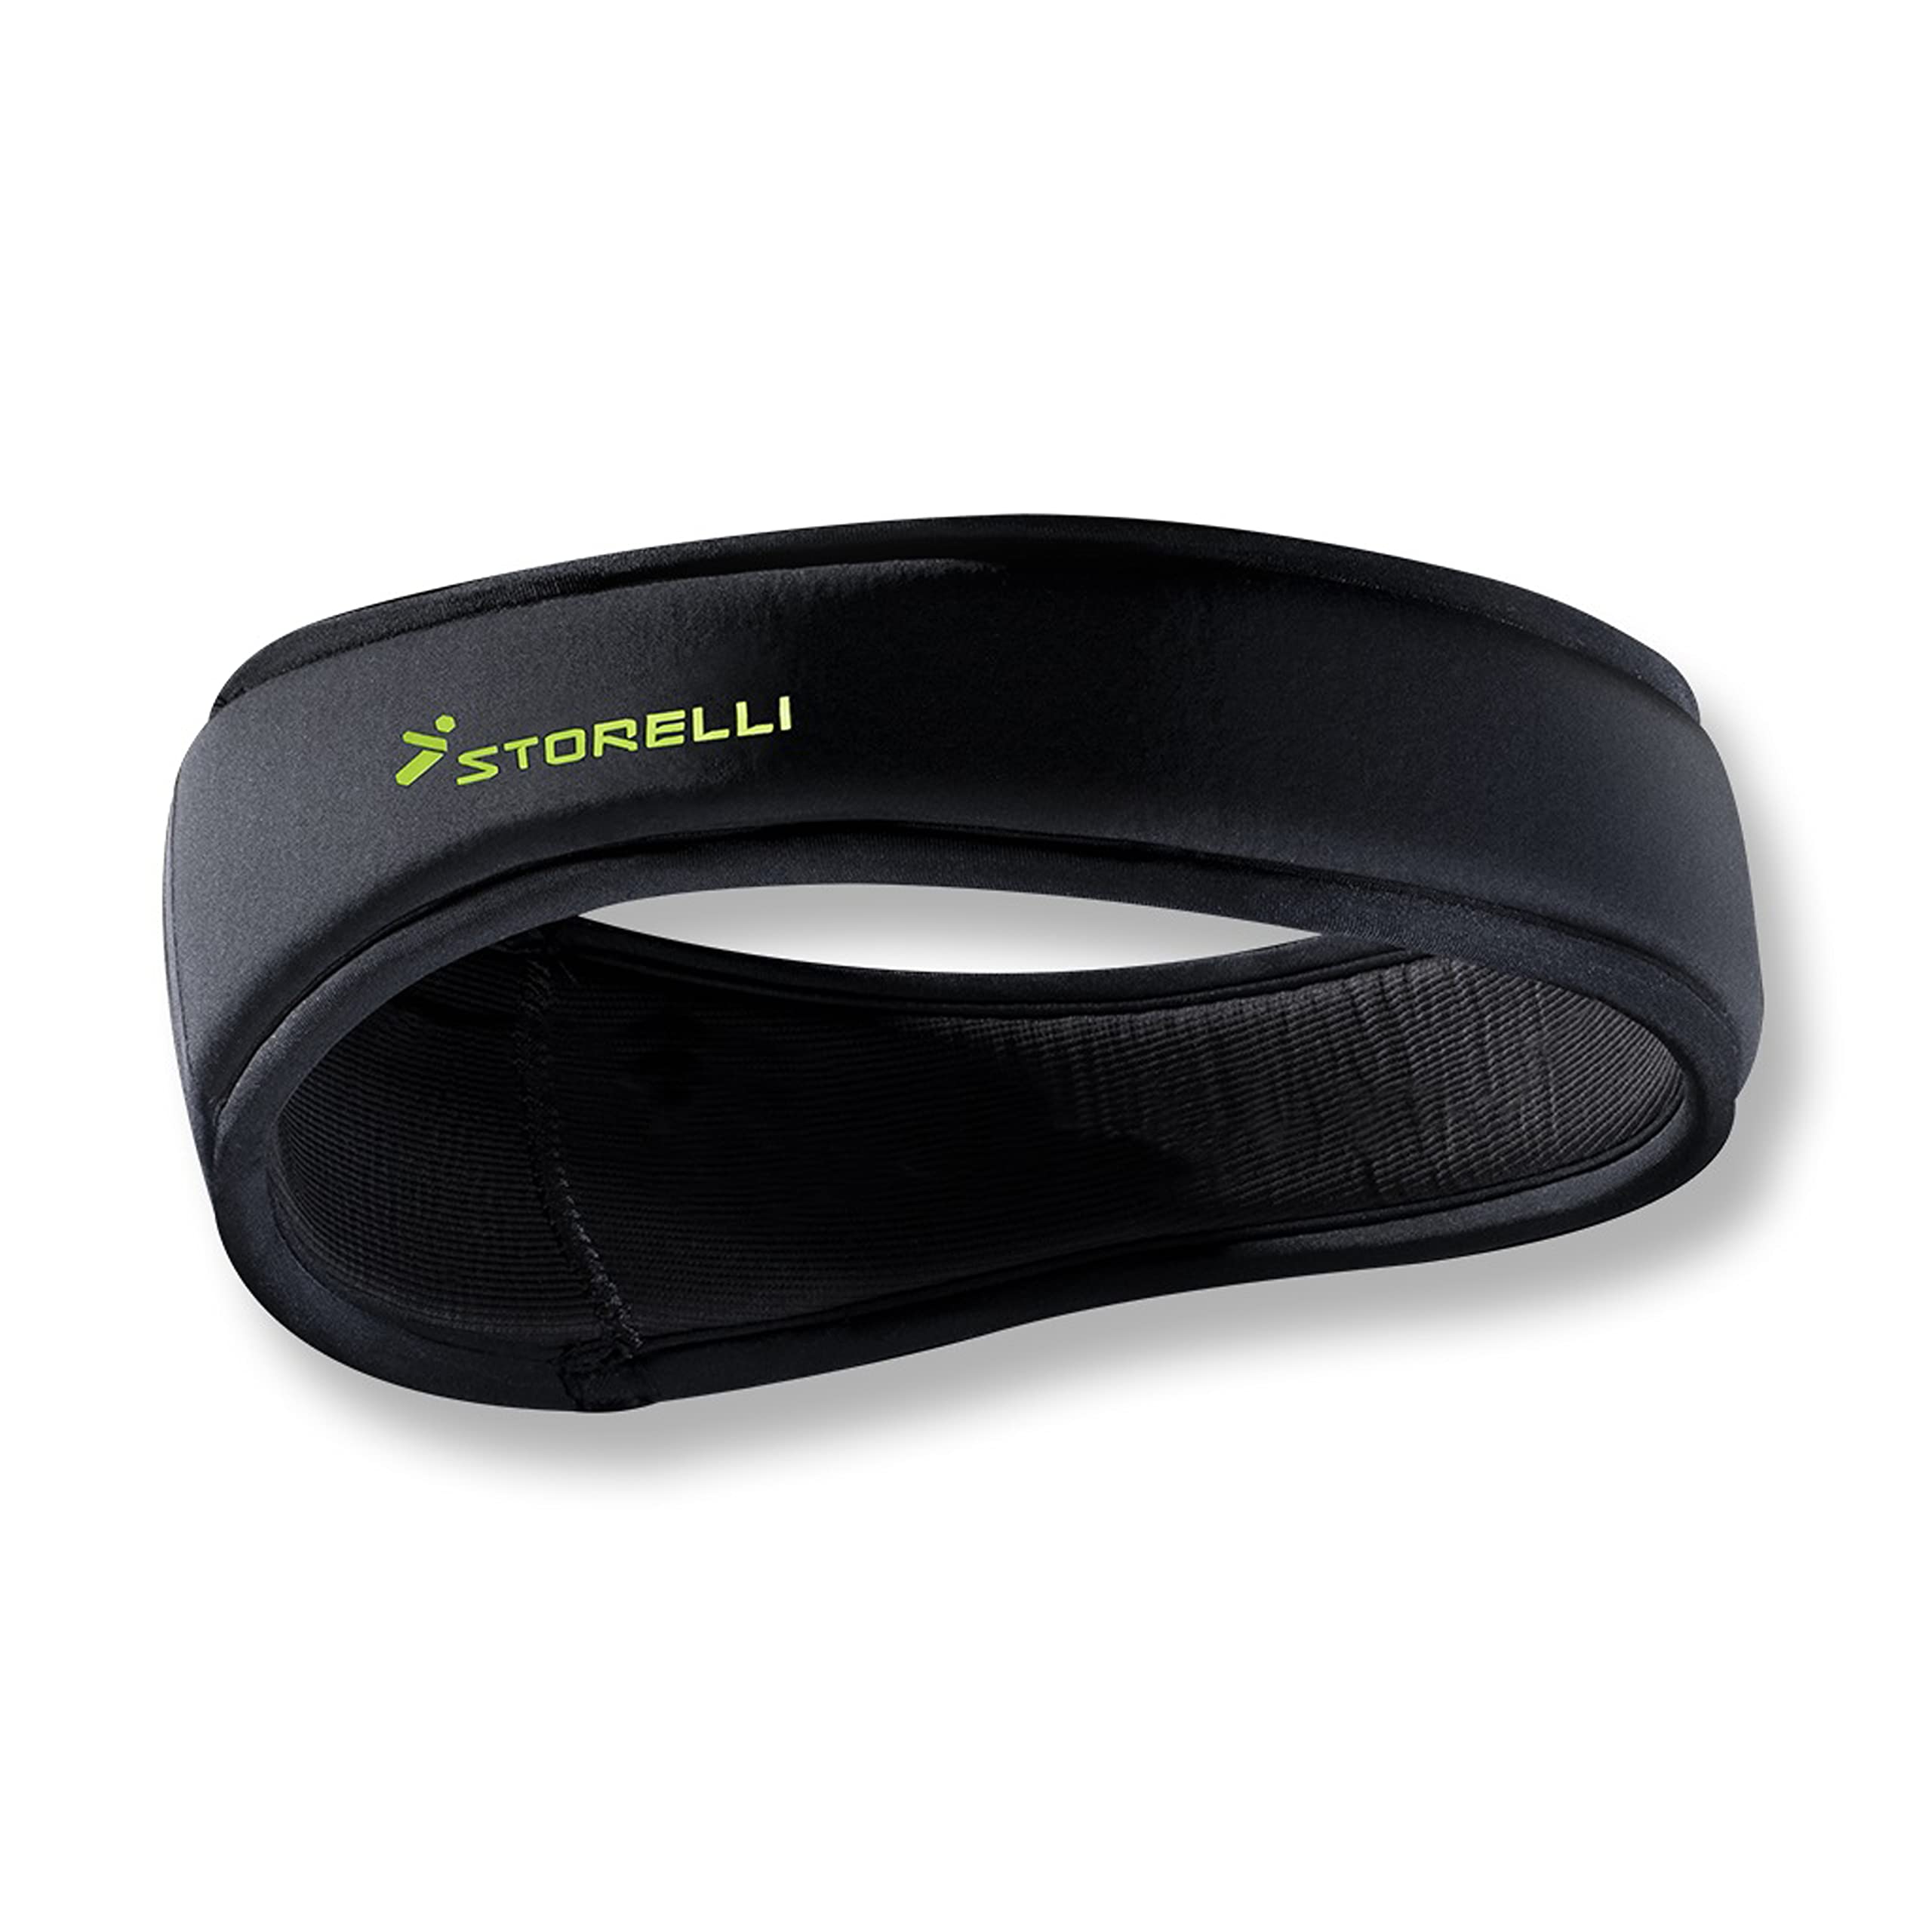 Storelli Exoshield Head Guard Slim Sports Headband Protective Soccer Headgear Black Size 4